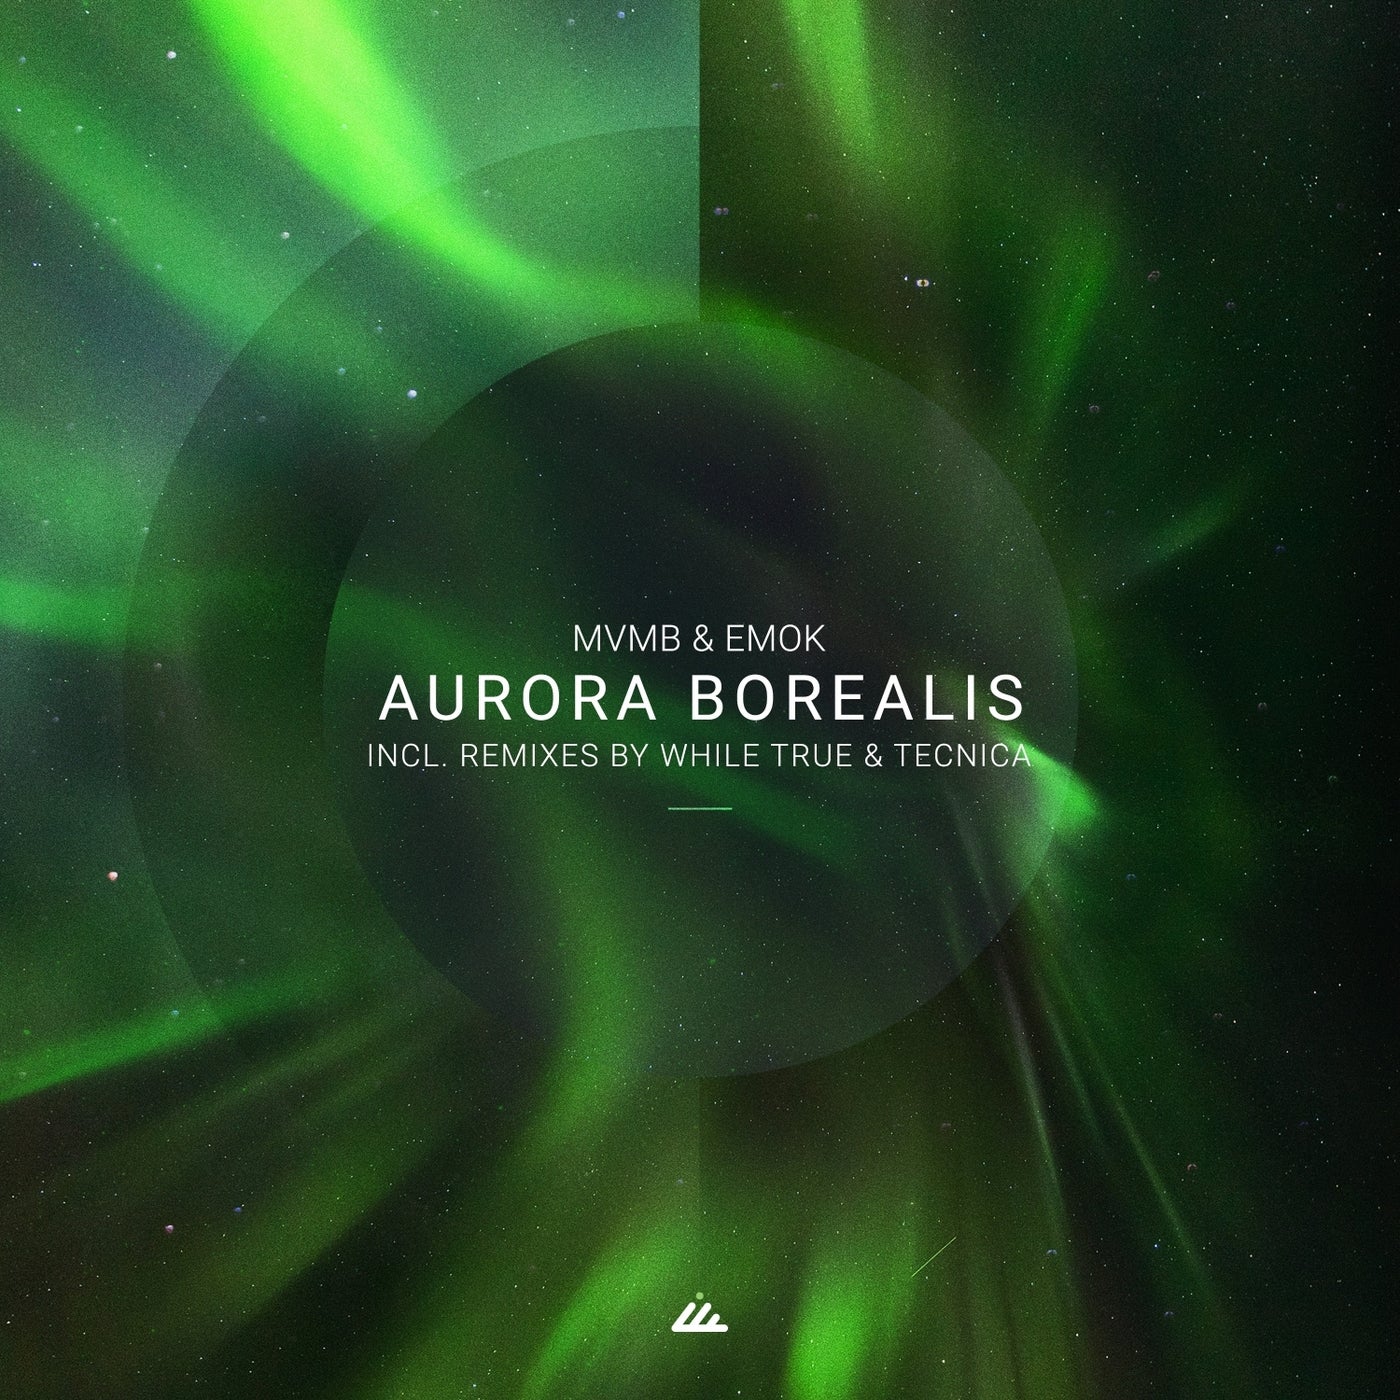 MVMB & Emok - Aurora Borealis [IBOGATECH109]